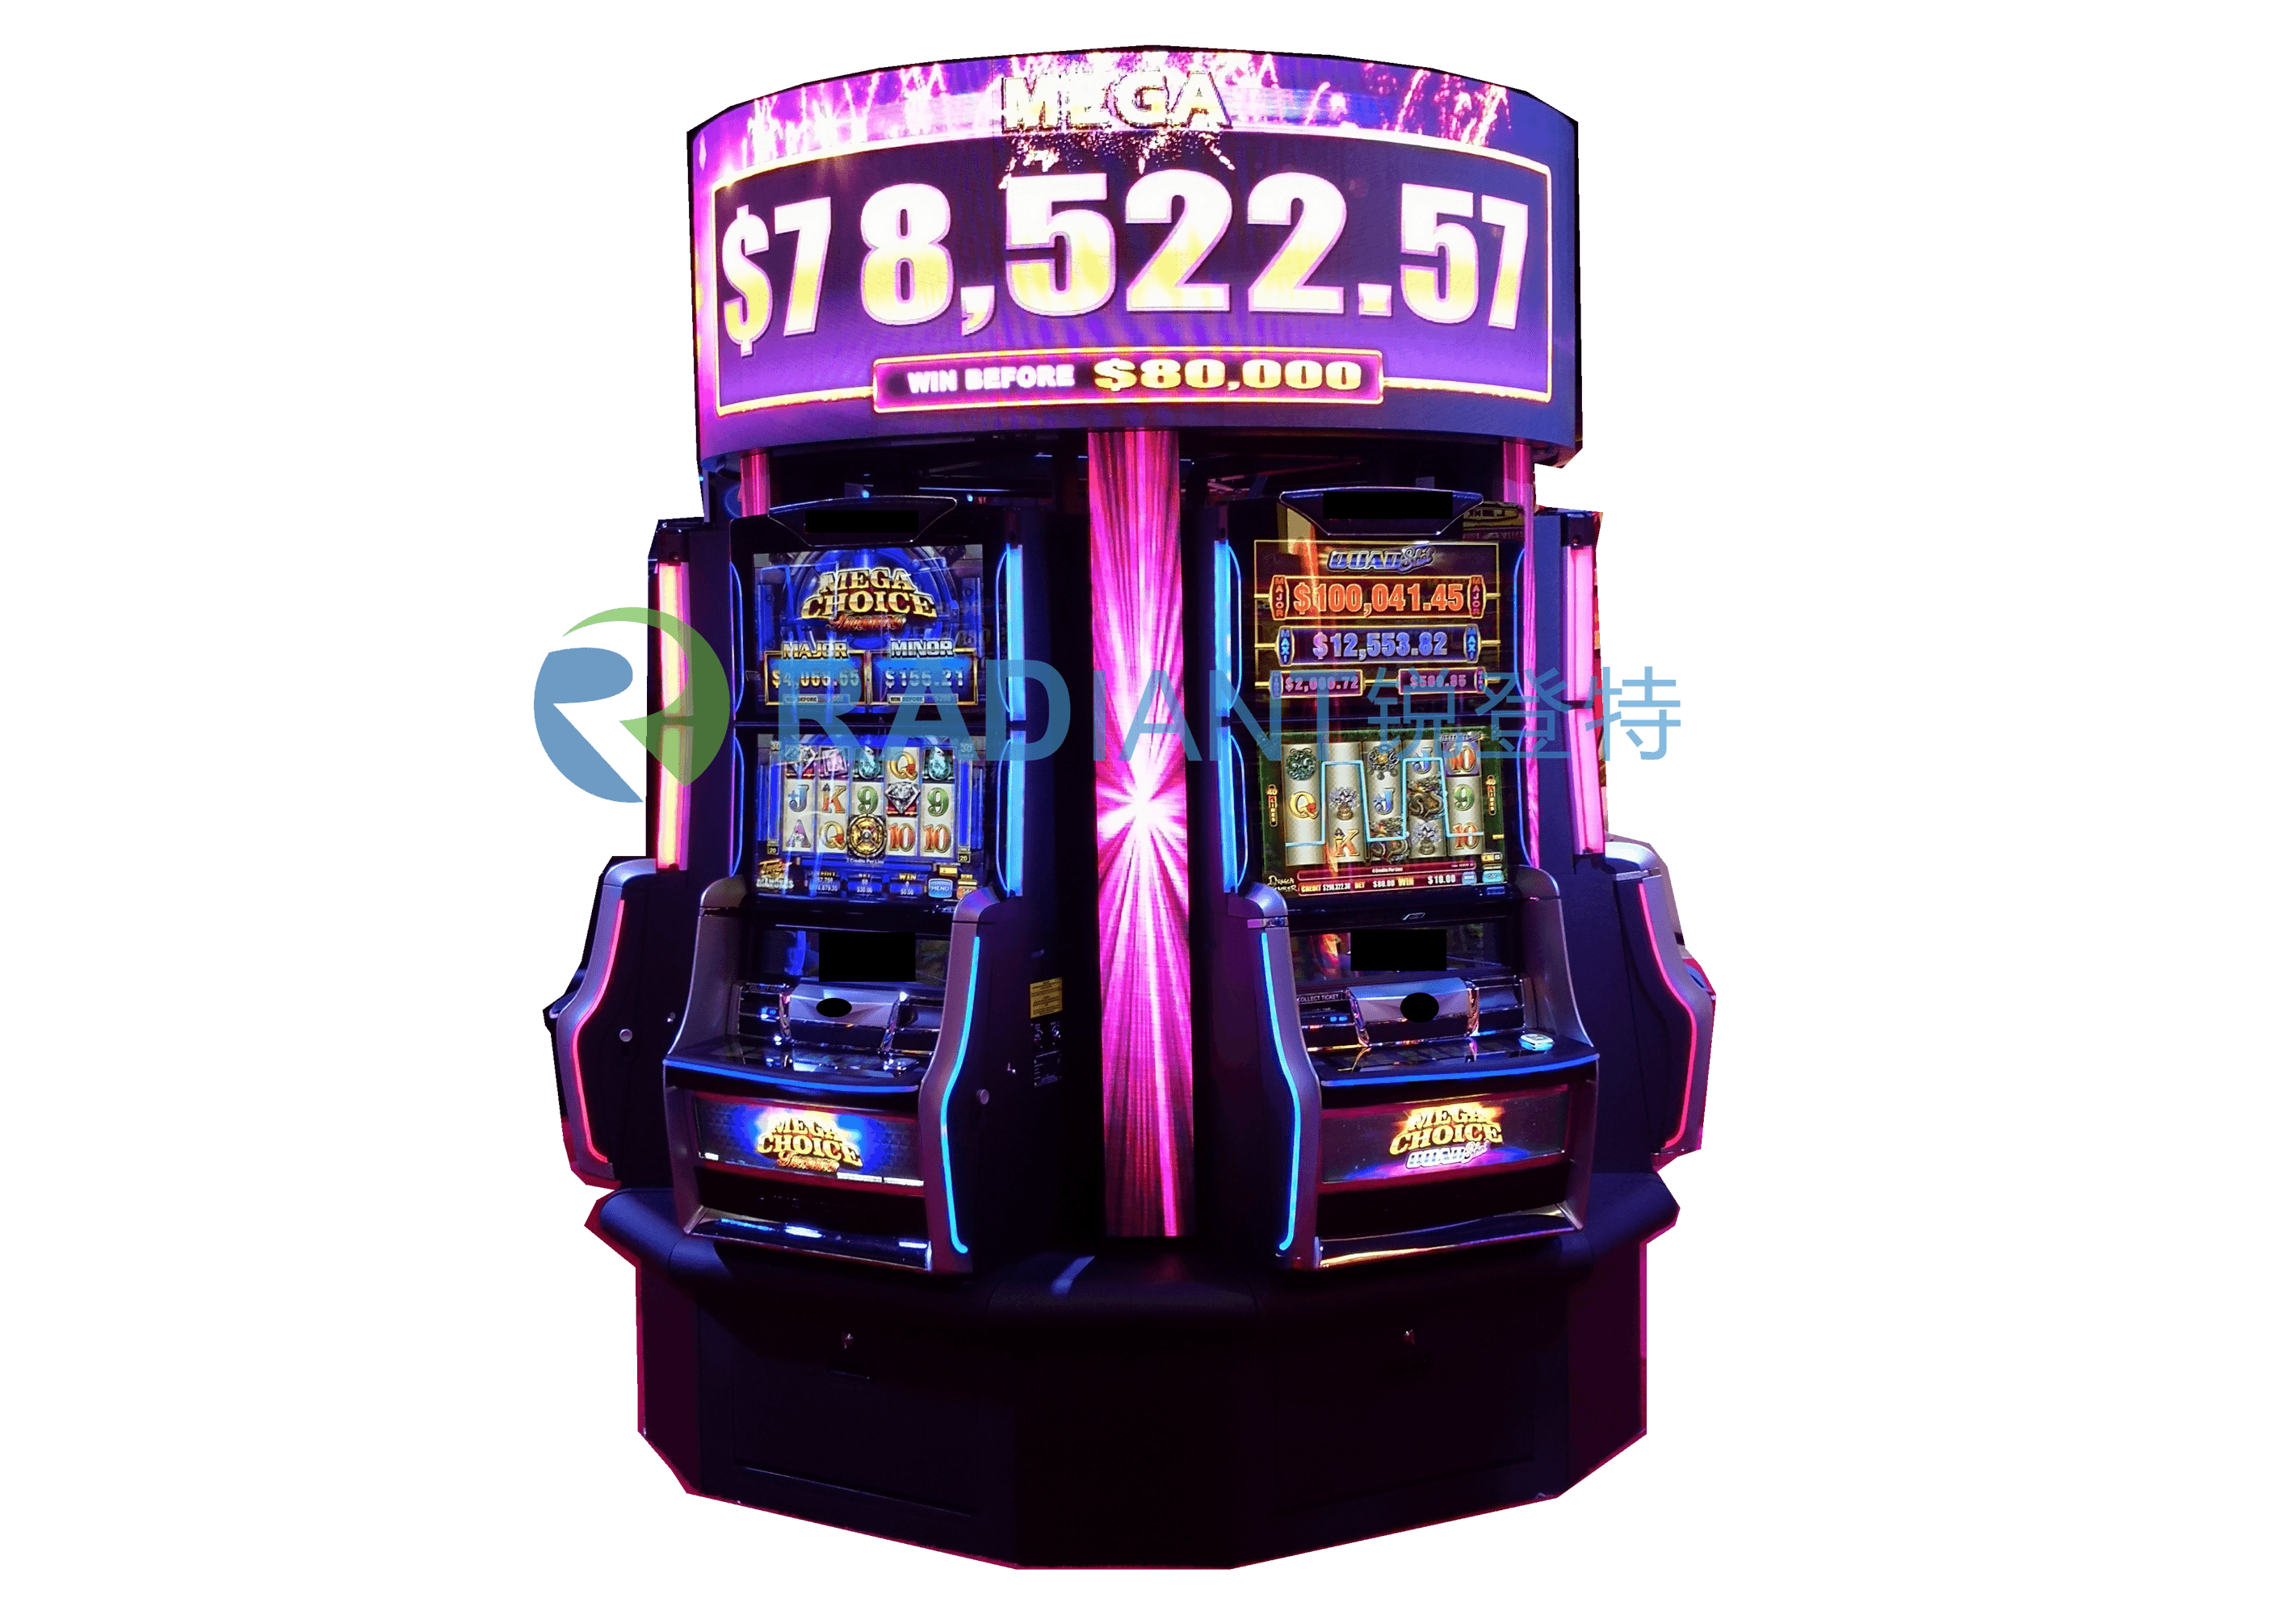 Okrugli LED ekran za Slot Machine kružni ekran za zabavno iskustvo igranja